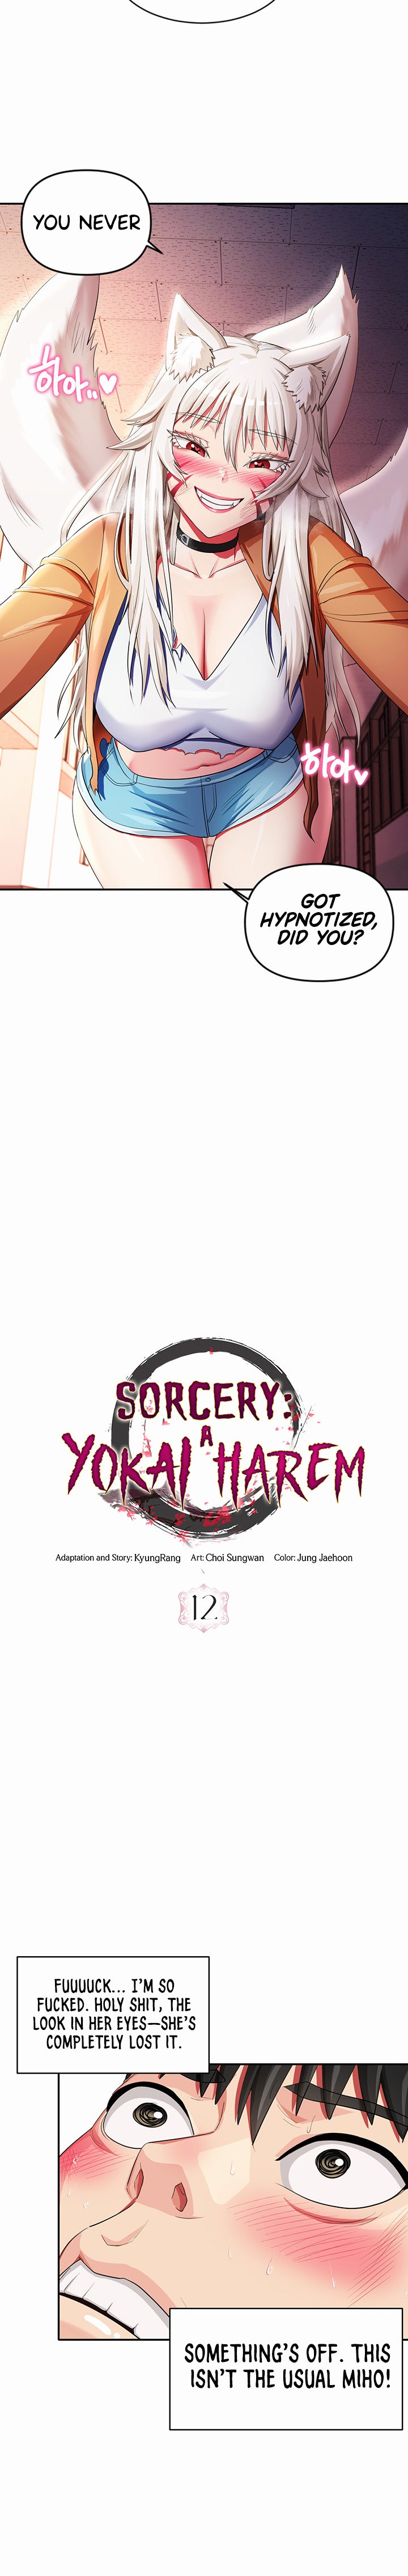 Sorcery Tales: Yokai Harem - Chapter 12 Page 12